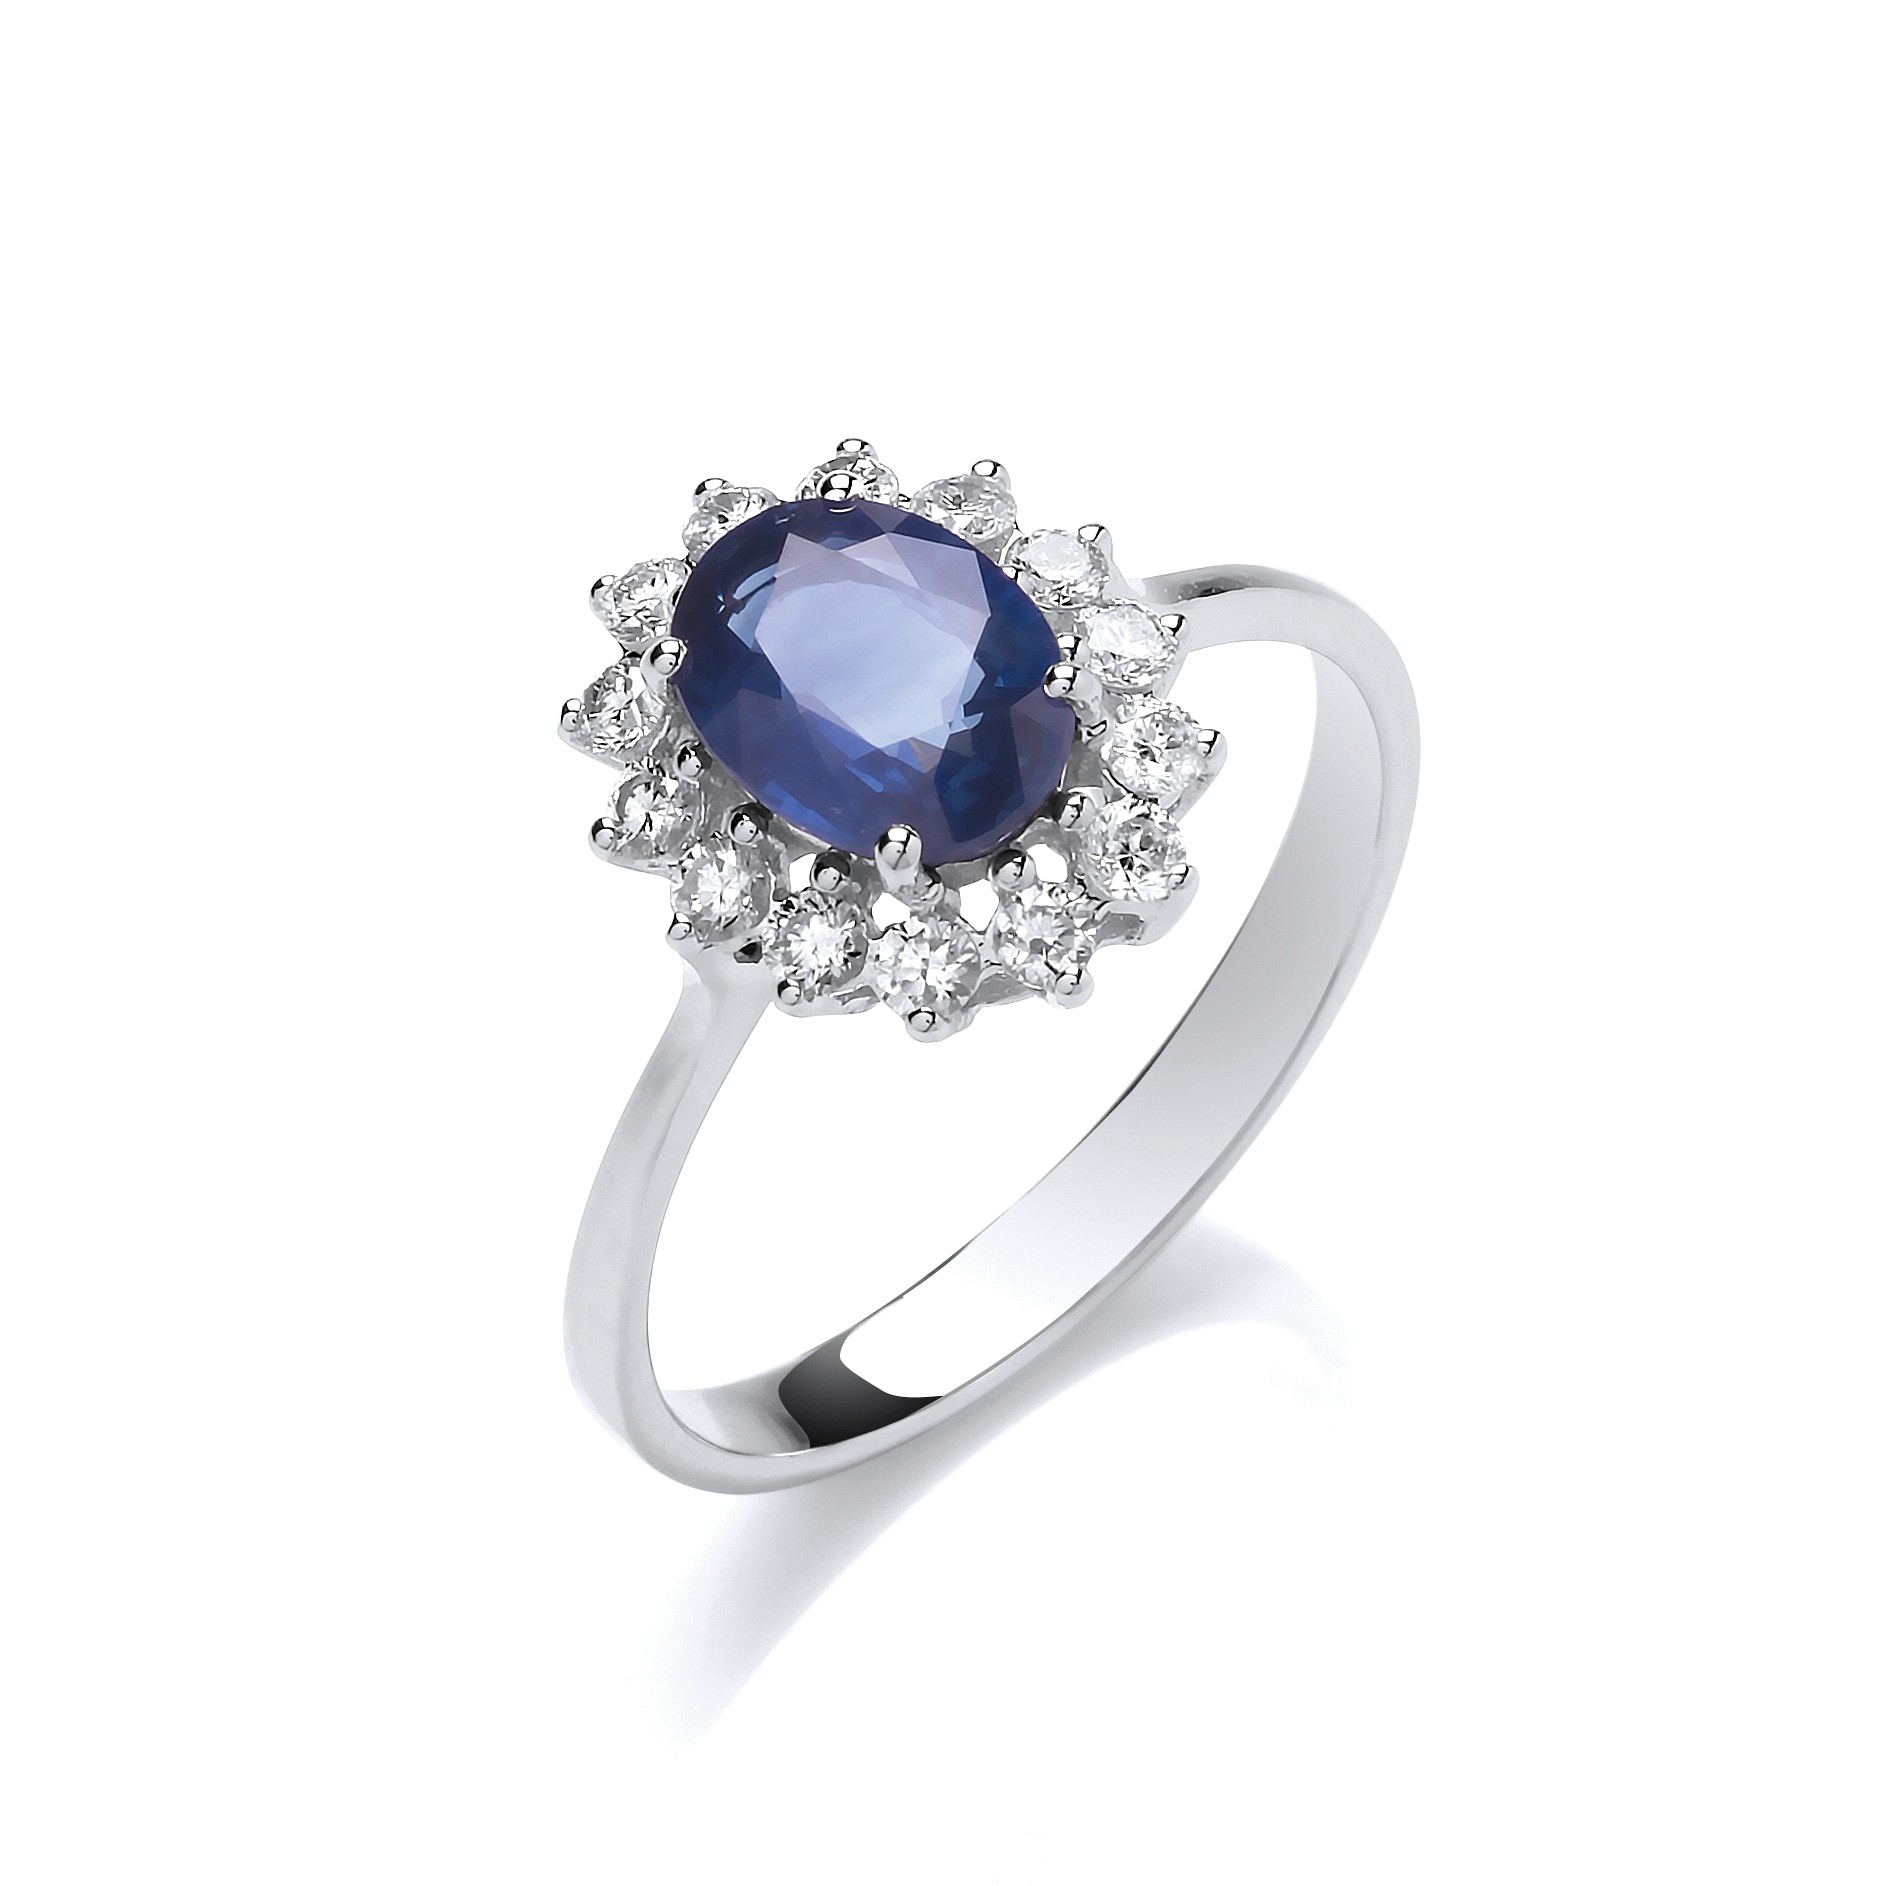 1.75 Carat Oval Cut Sapphire With Round Diamond Halo Set Ring